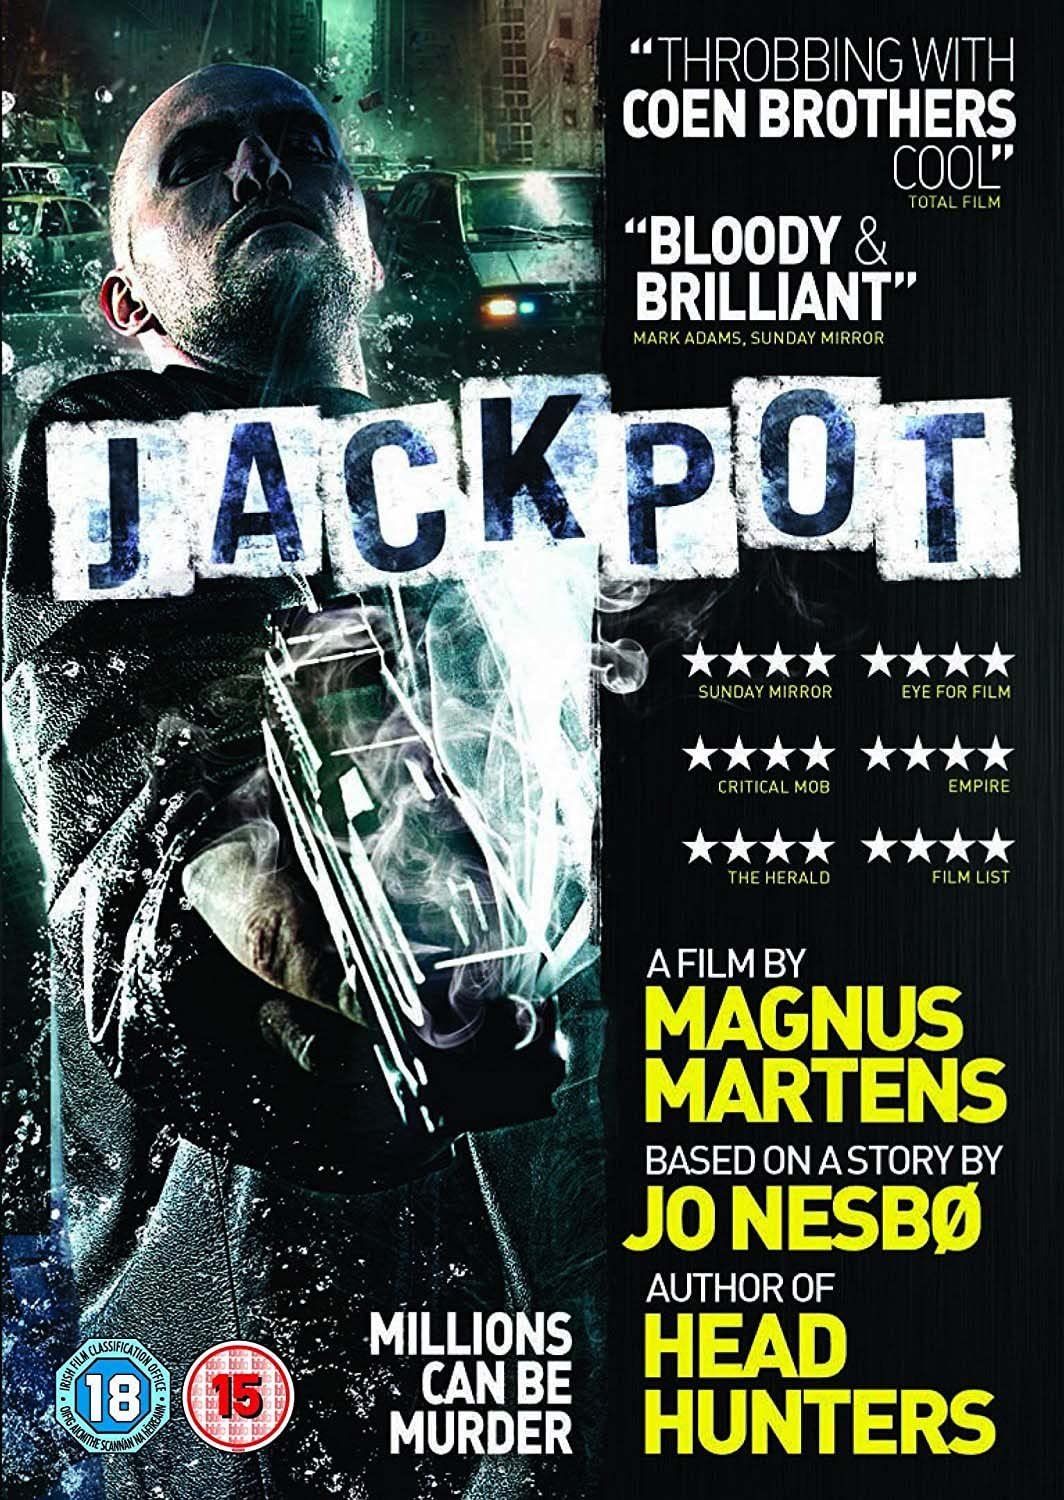 Jackpot - Action/Drama [DVD]